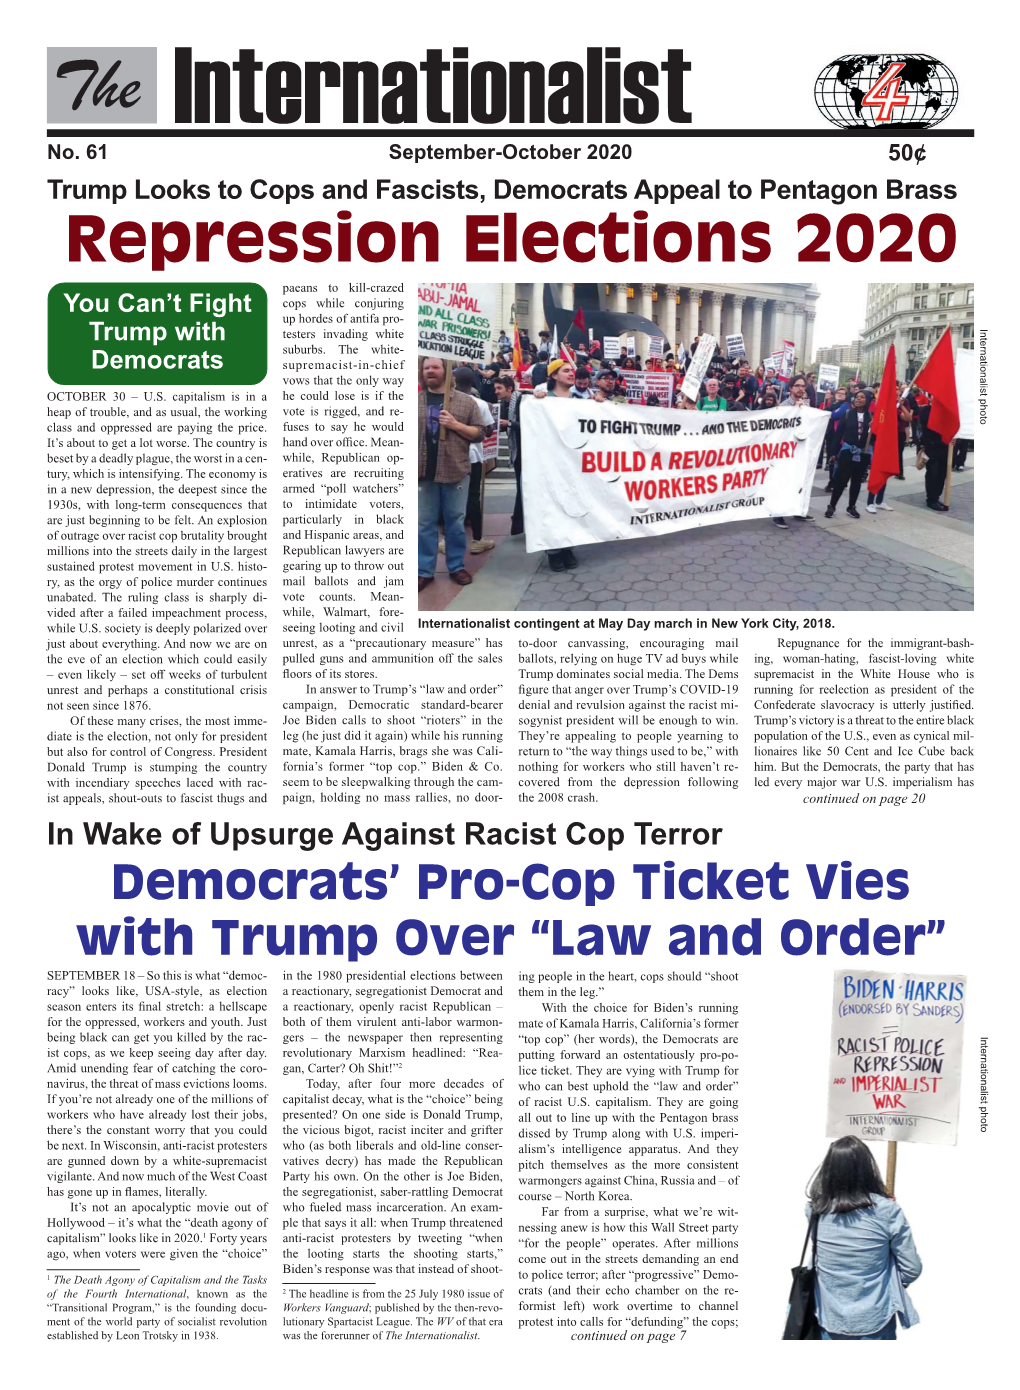 Repression Elections 2020